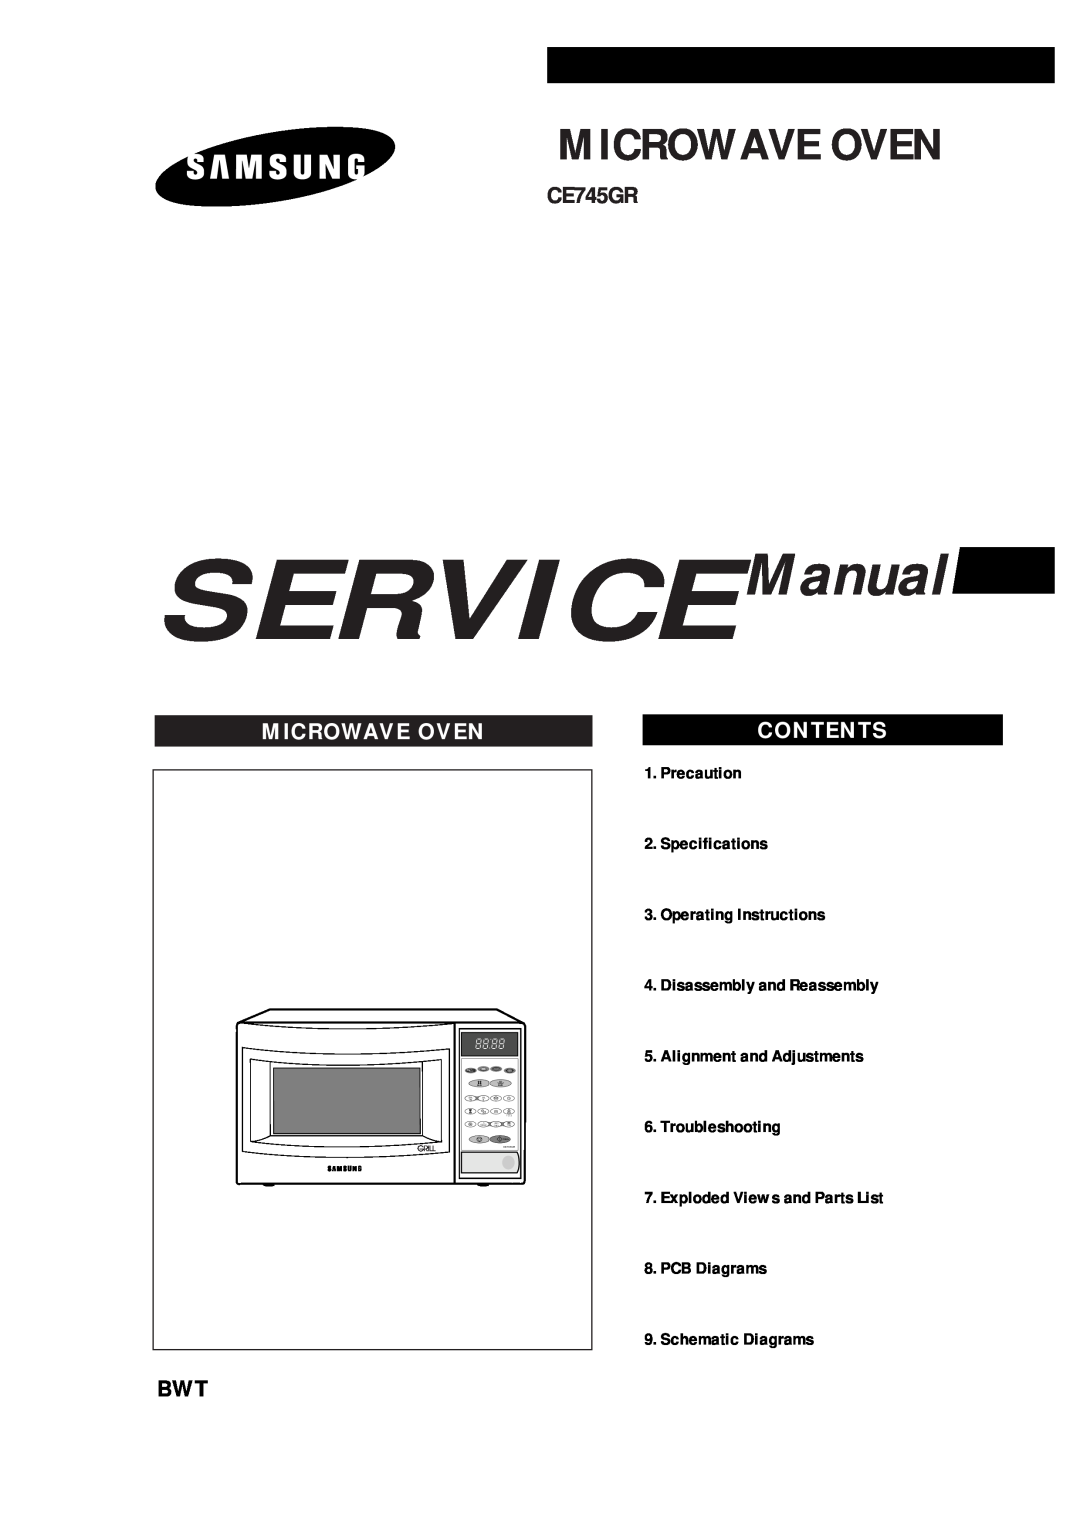 Samsung CE745GR service manual Microwave Oven, Contents, Auto, 1-2-3, l b s, 10min, 1min+ 